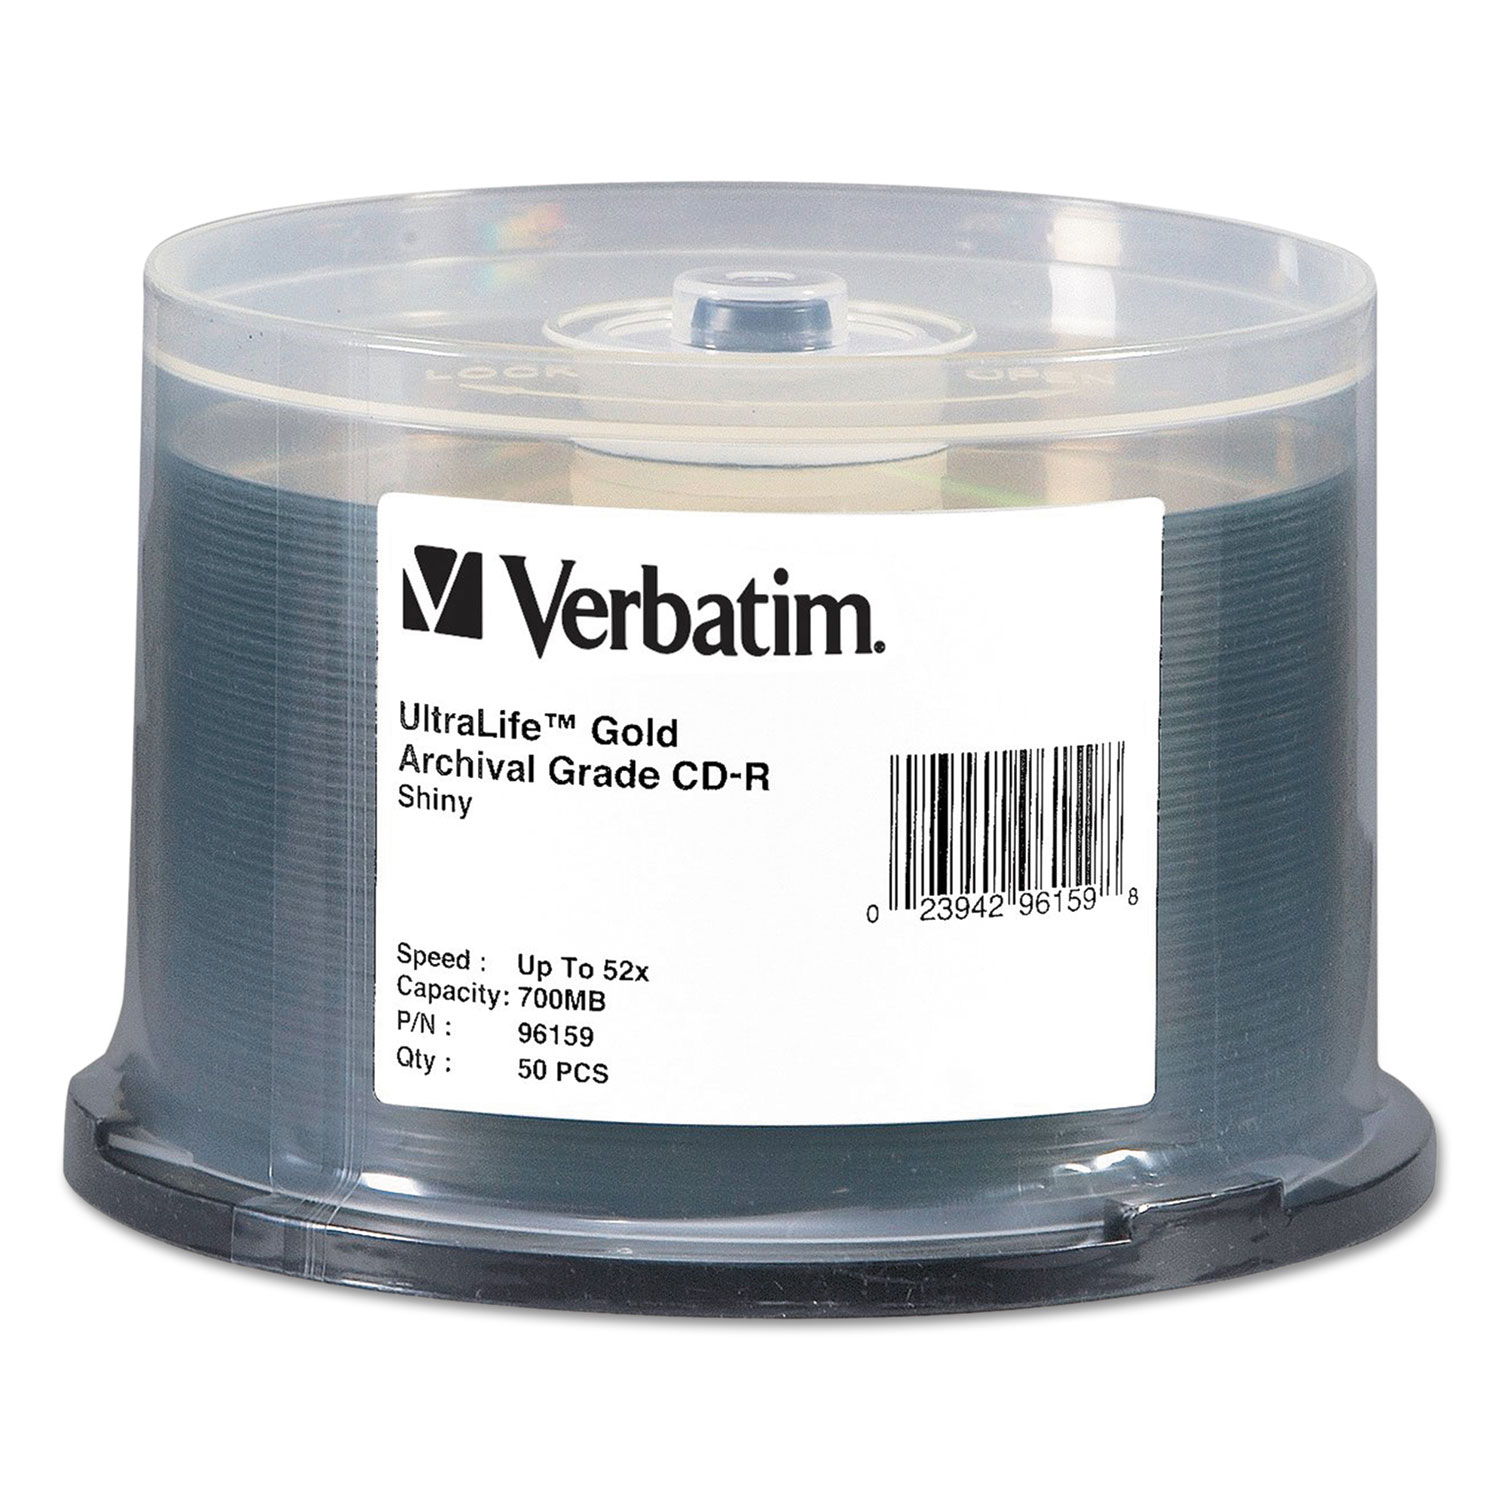  Verbatim 96159 UltraLife Gold Archival Grade CD-R w/Branded Surface 700MB 52X, 50/PK Spindle (VER96159) 